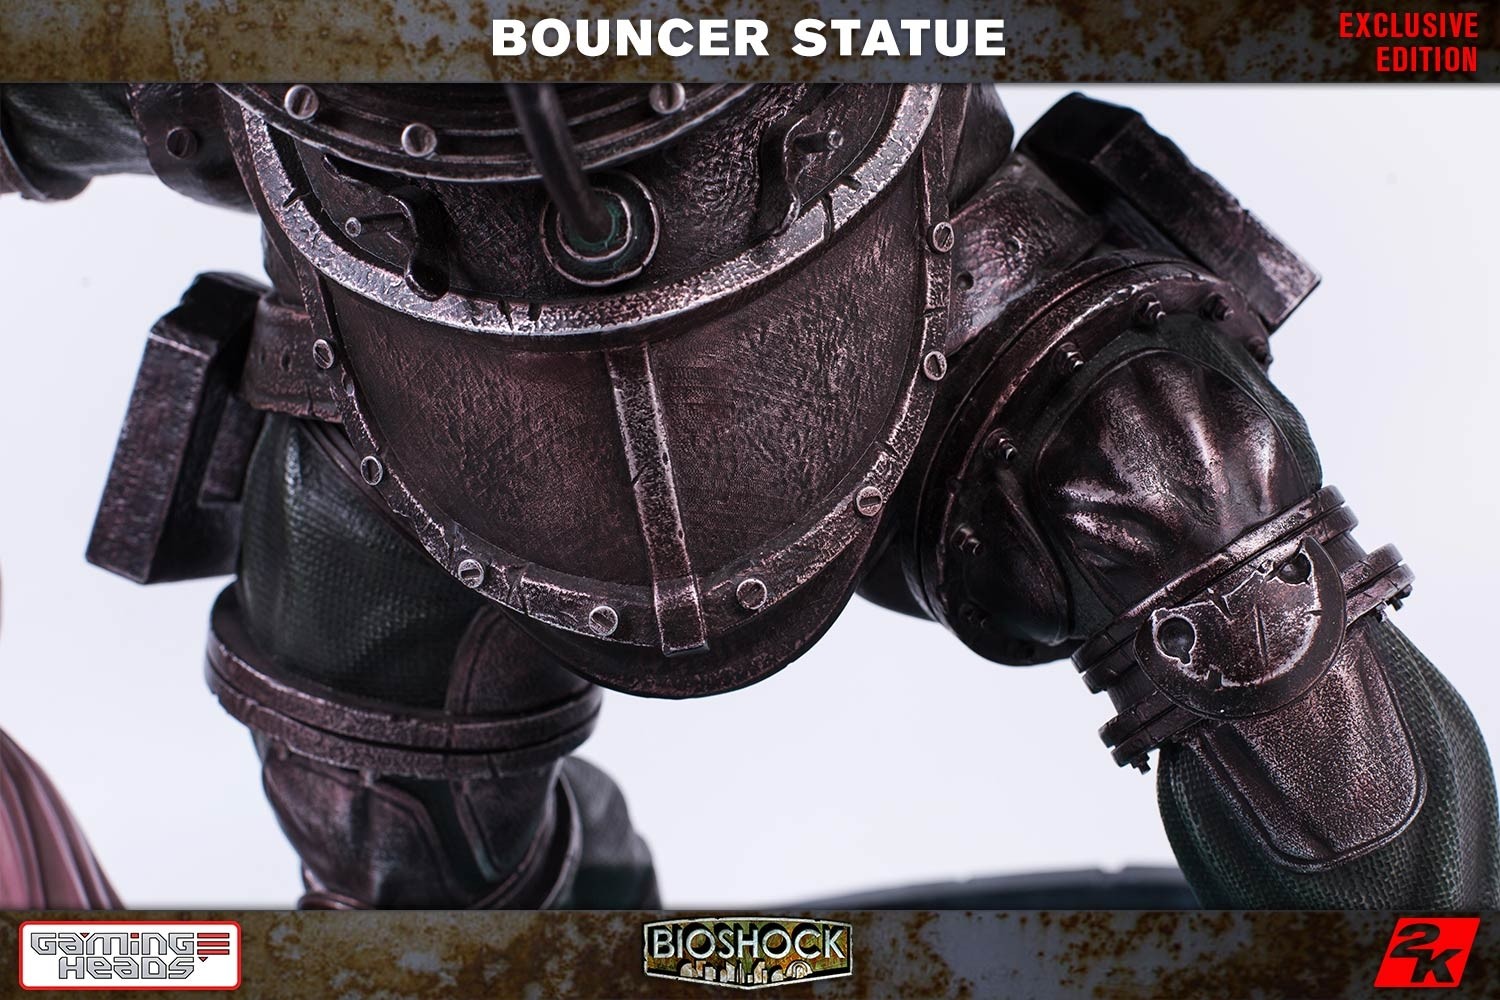 BioShock: Big Daddy - Bouncer Statue